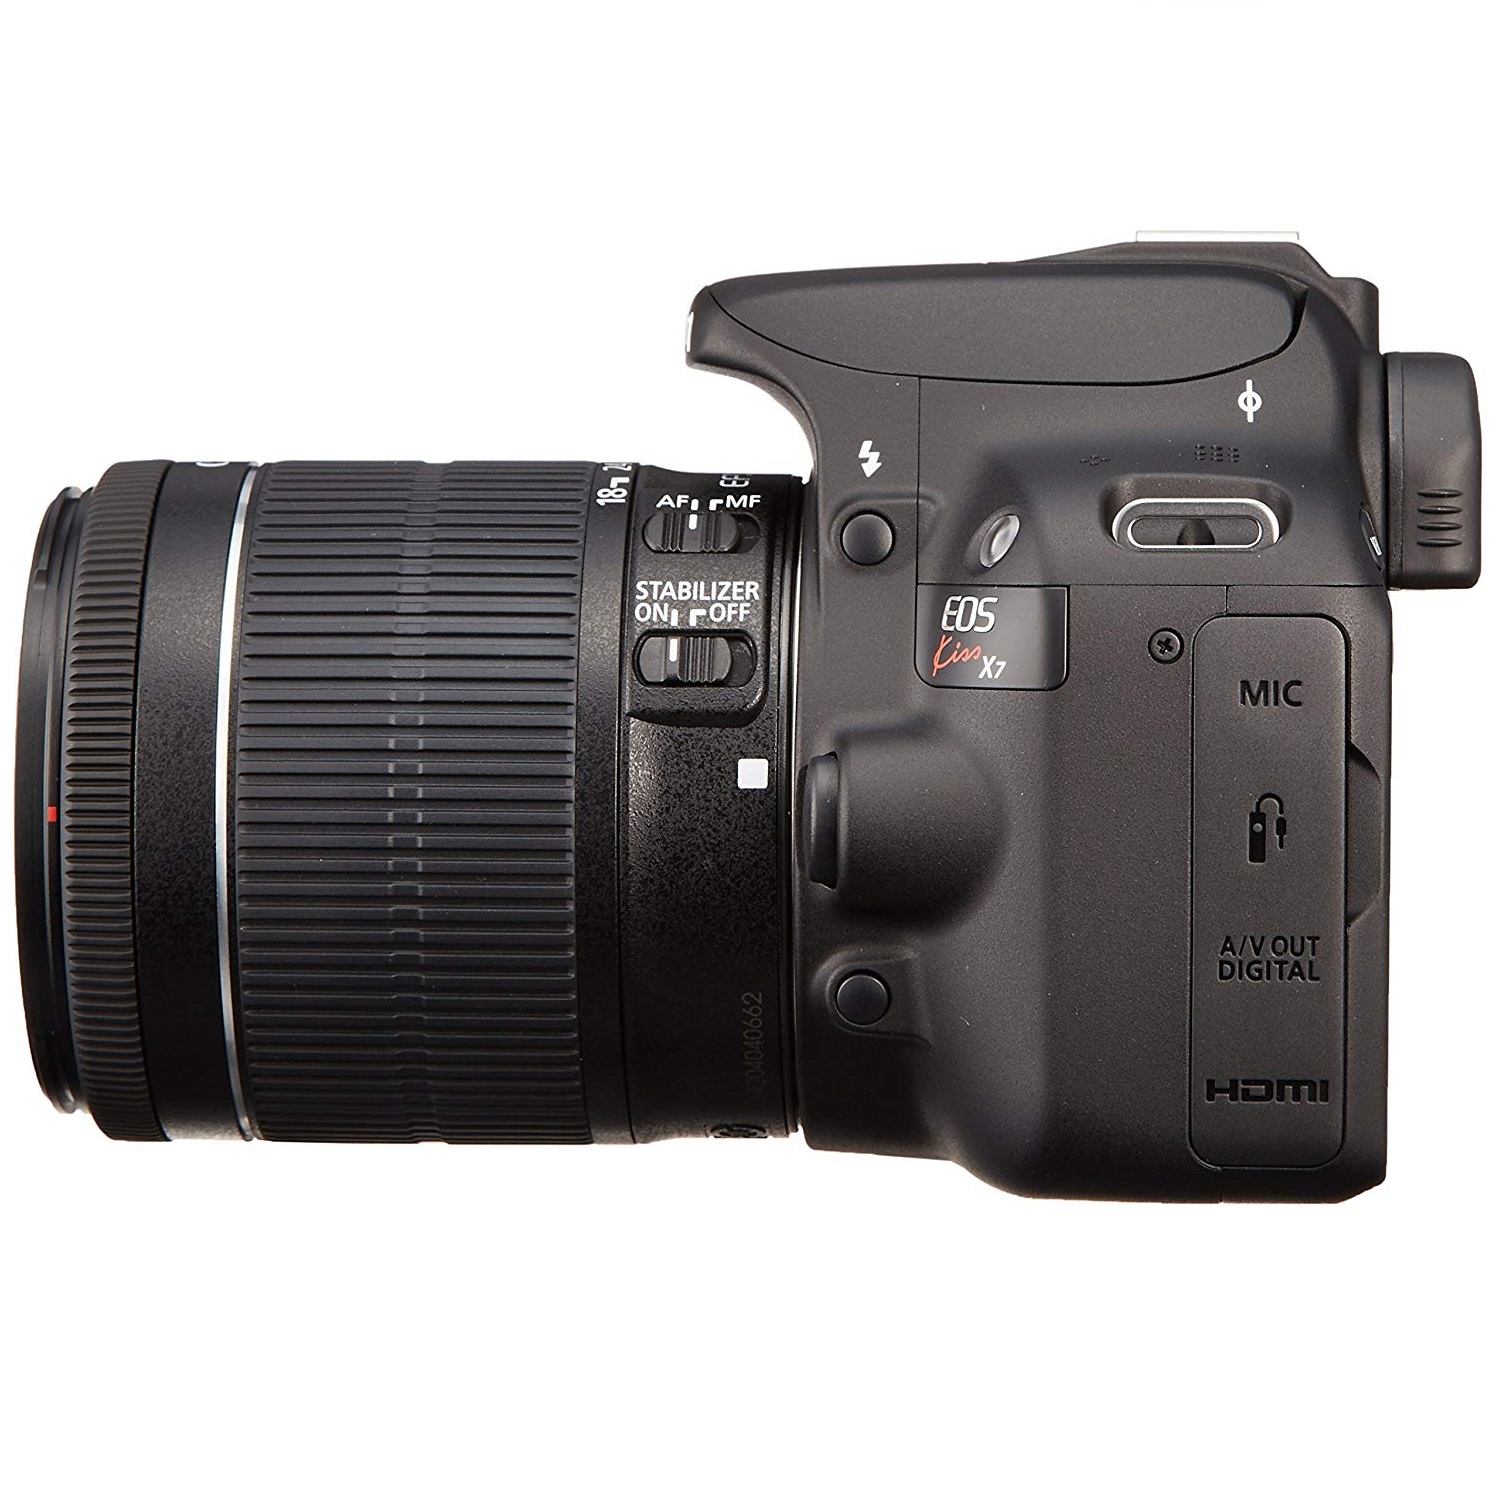 CANON EOS Kiss X7 EF-S 18-55 IS STM レンズキット 一眼レフ | カメラ 